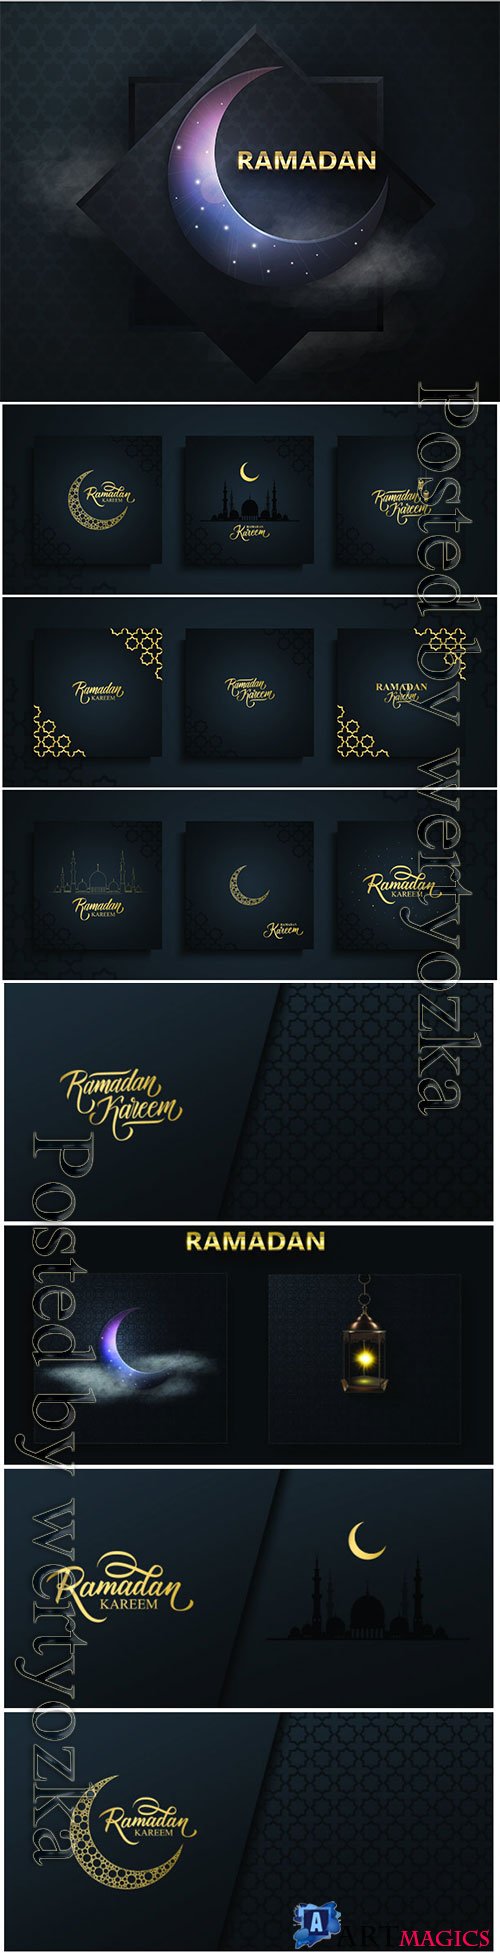 Ramadan Kareem vector background, Eid mubarak greeting card